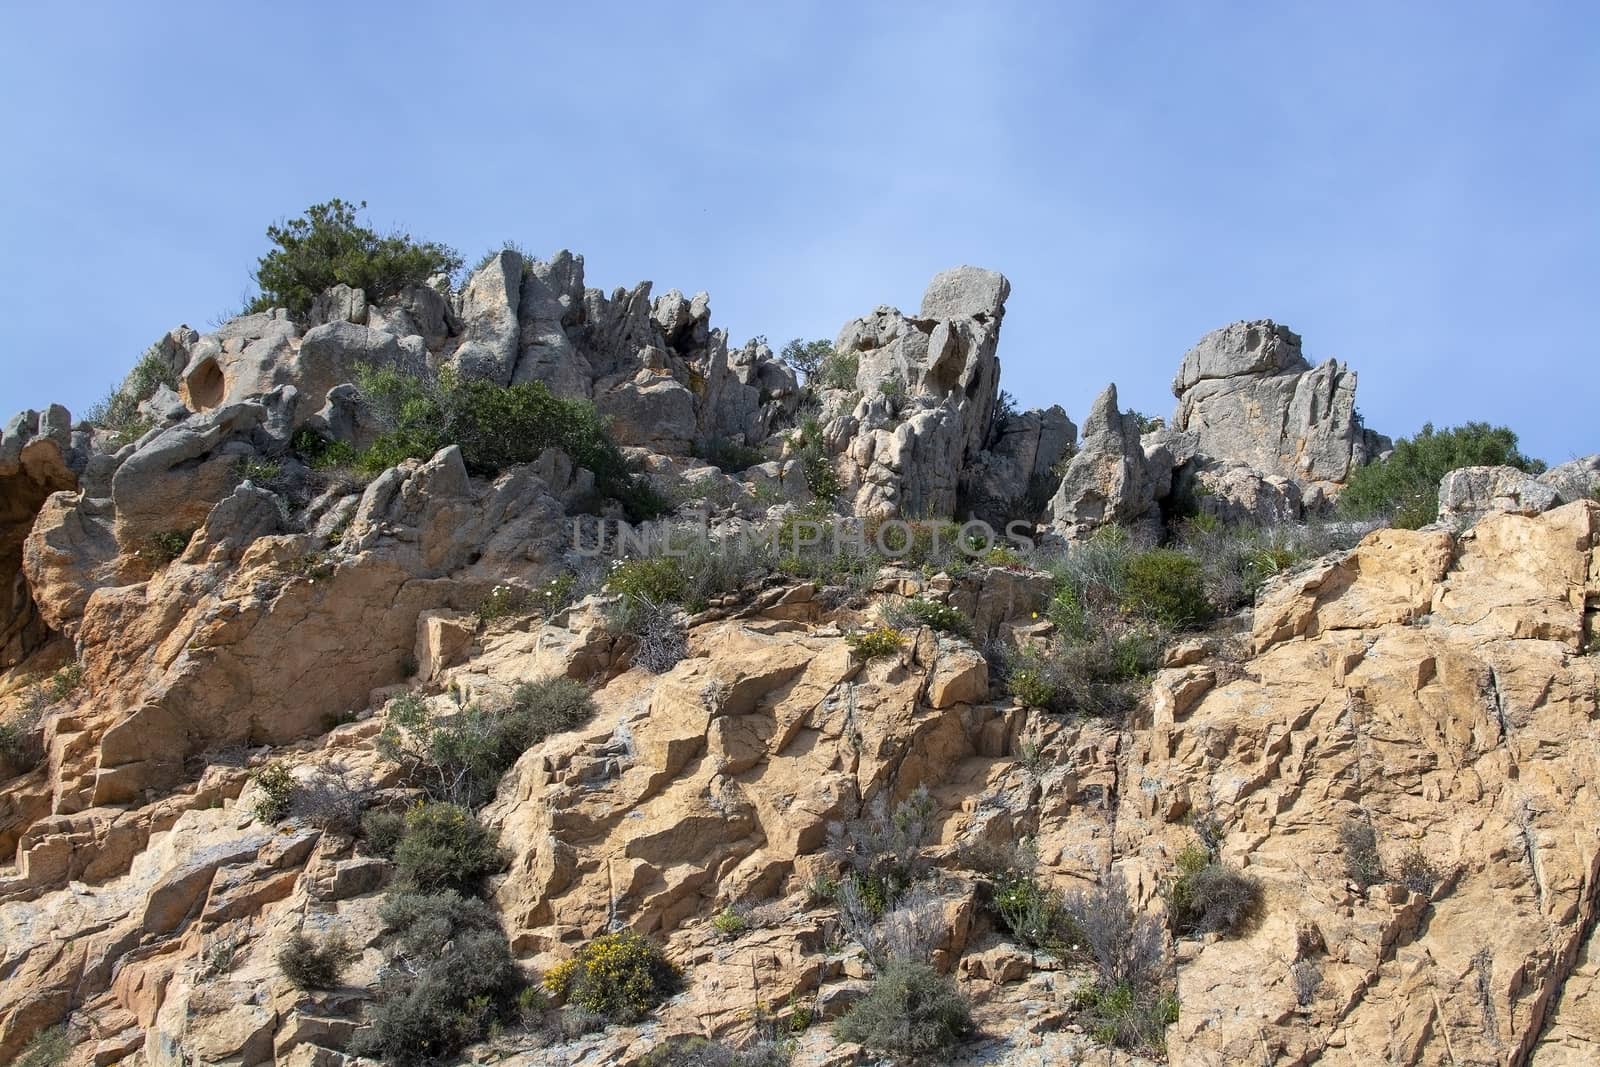 Granite rock shapes against blue sky in Costa Smeralda, Sardinia, Italy.